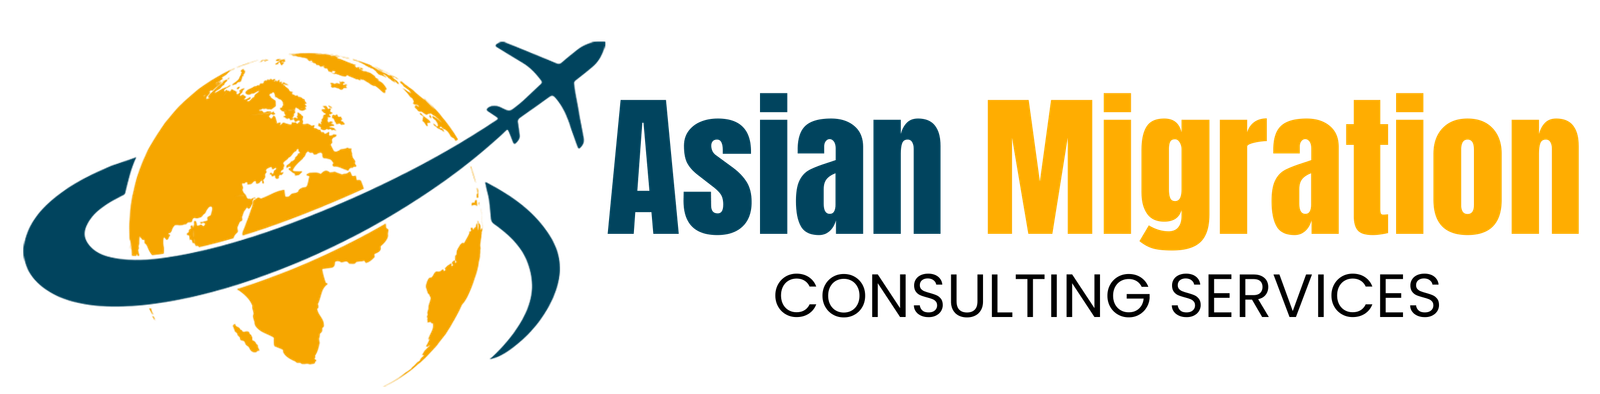 Asian Migration Services